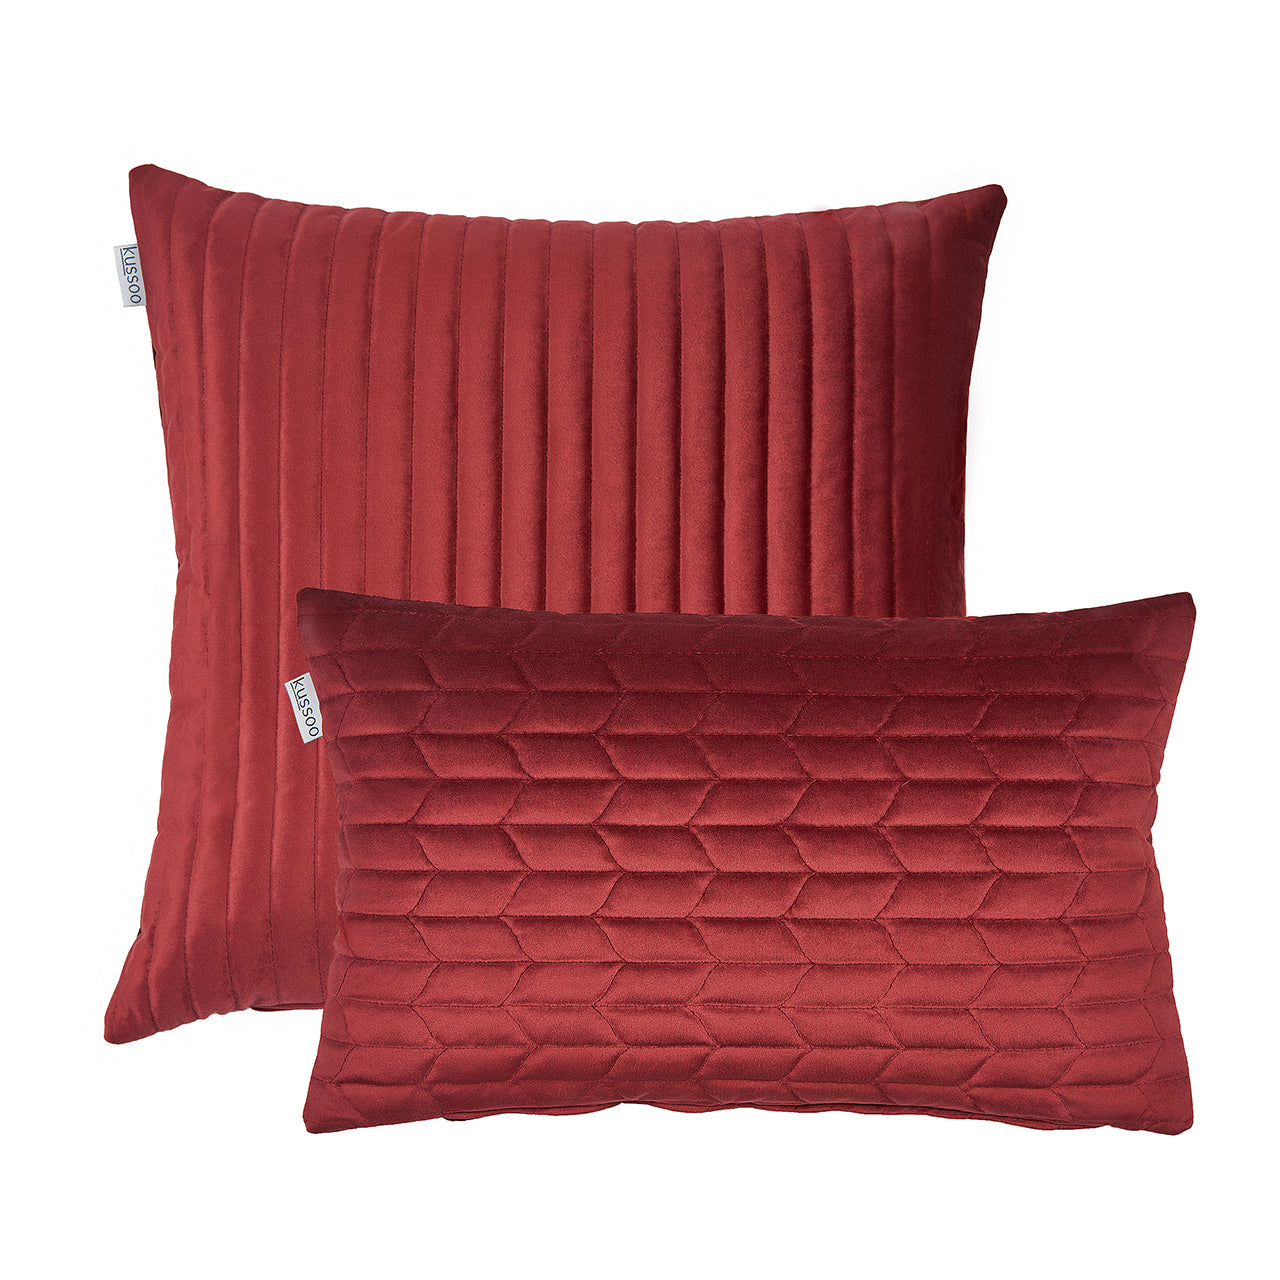 Kussenset-fluweel-bordeaux-rood-streep-en-30x50-cm